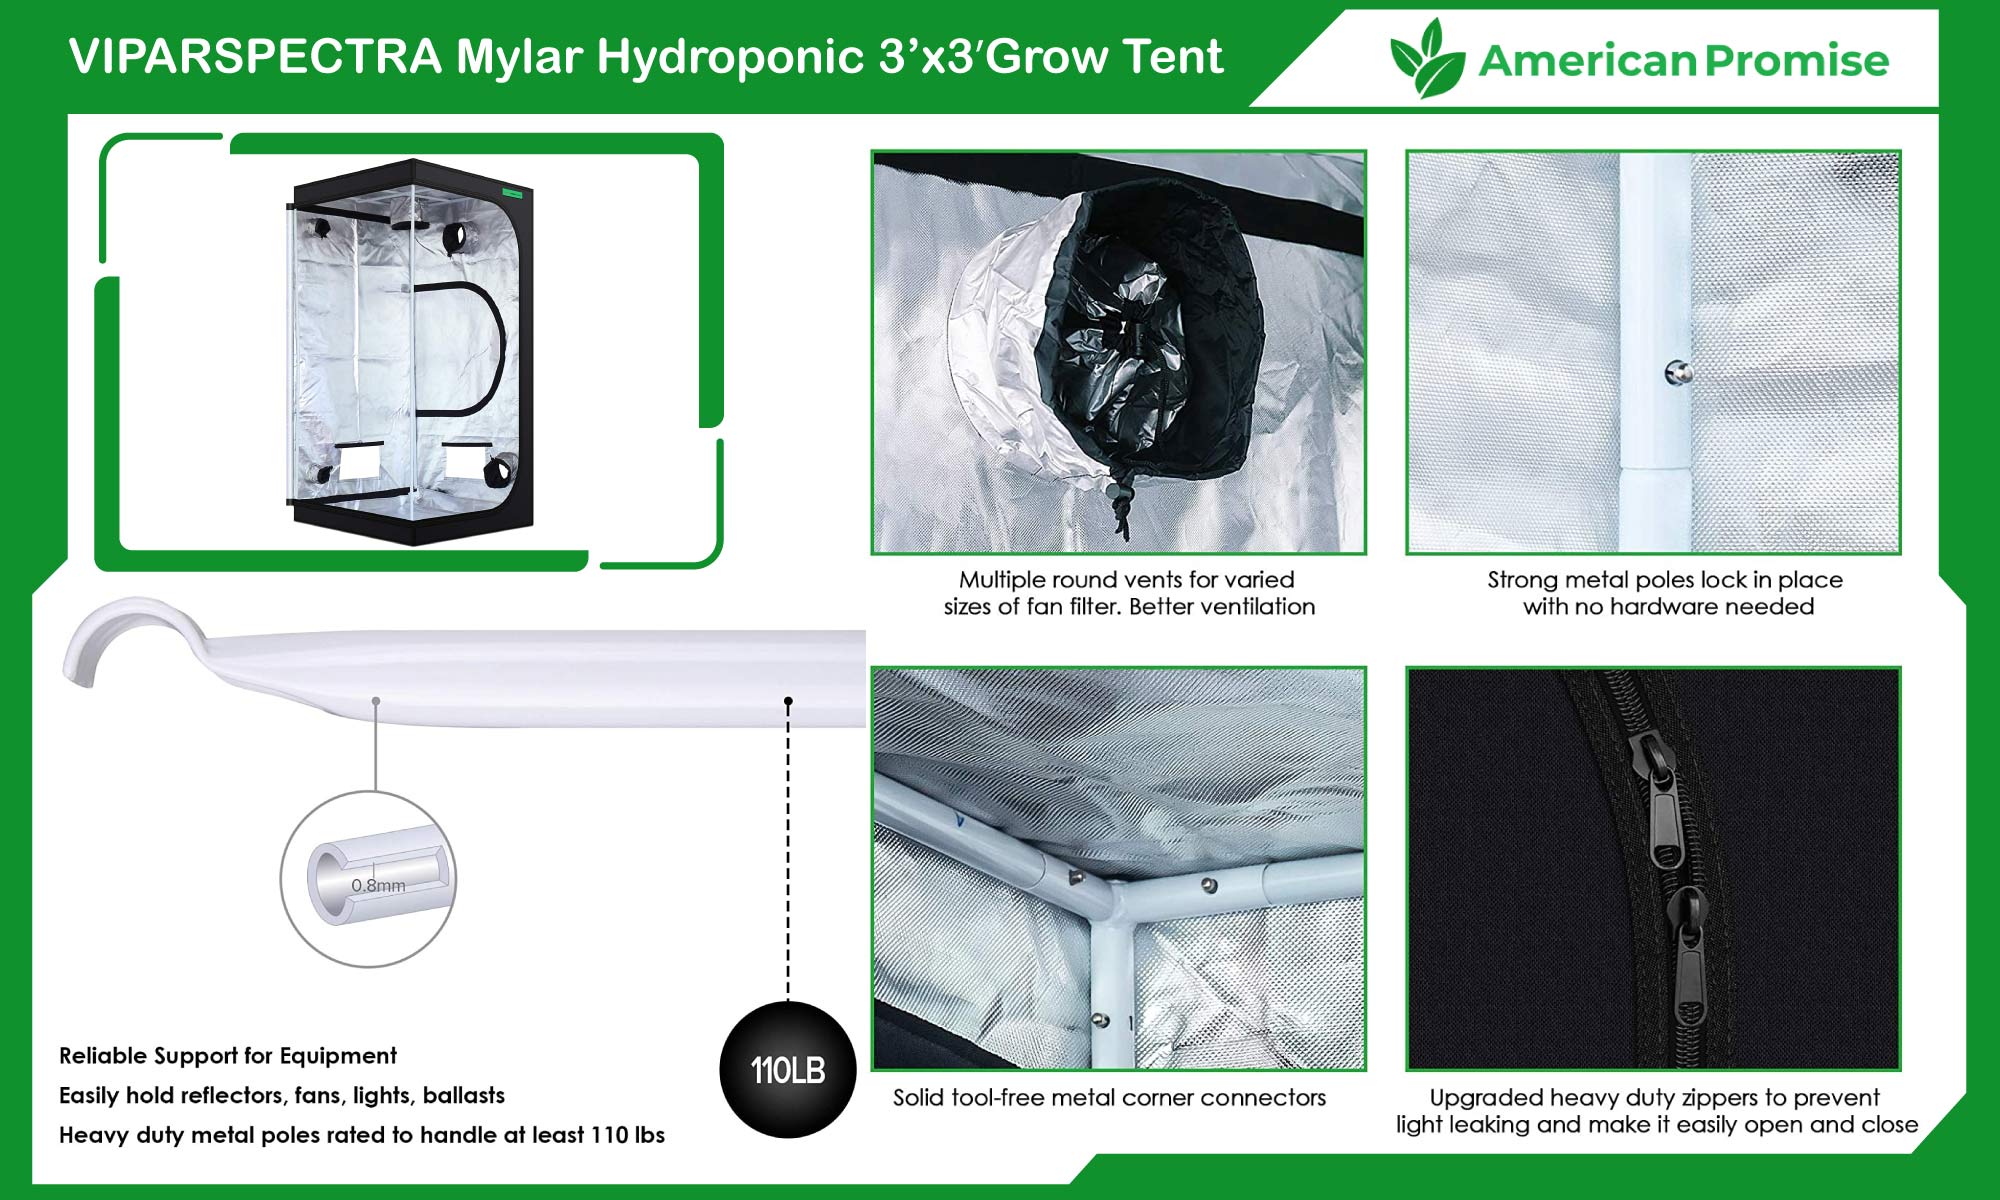 VIPARSPECTRA Mylar Hydroponic 3'x3' Grow Tent